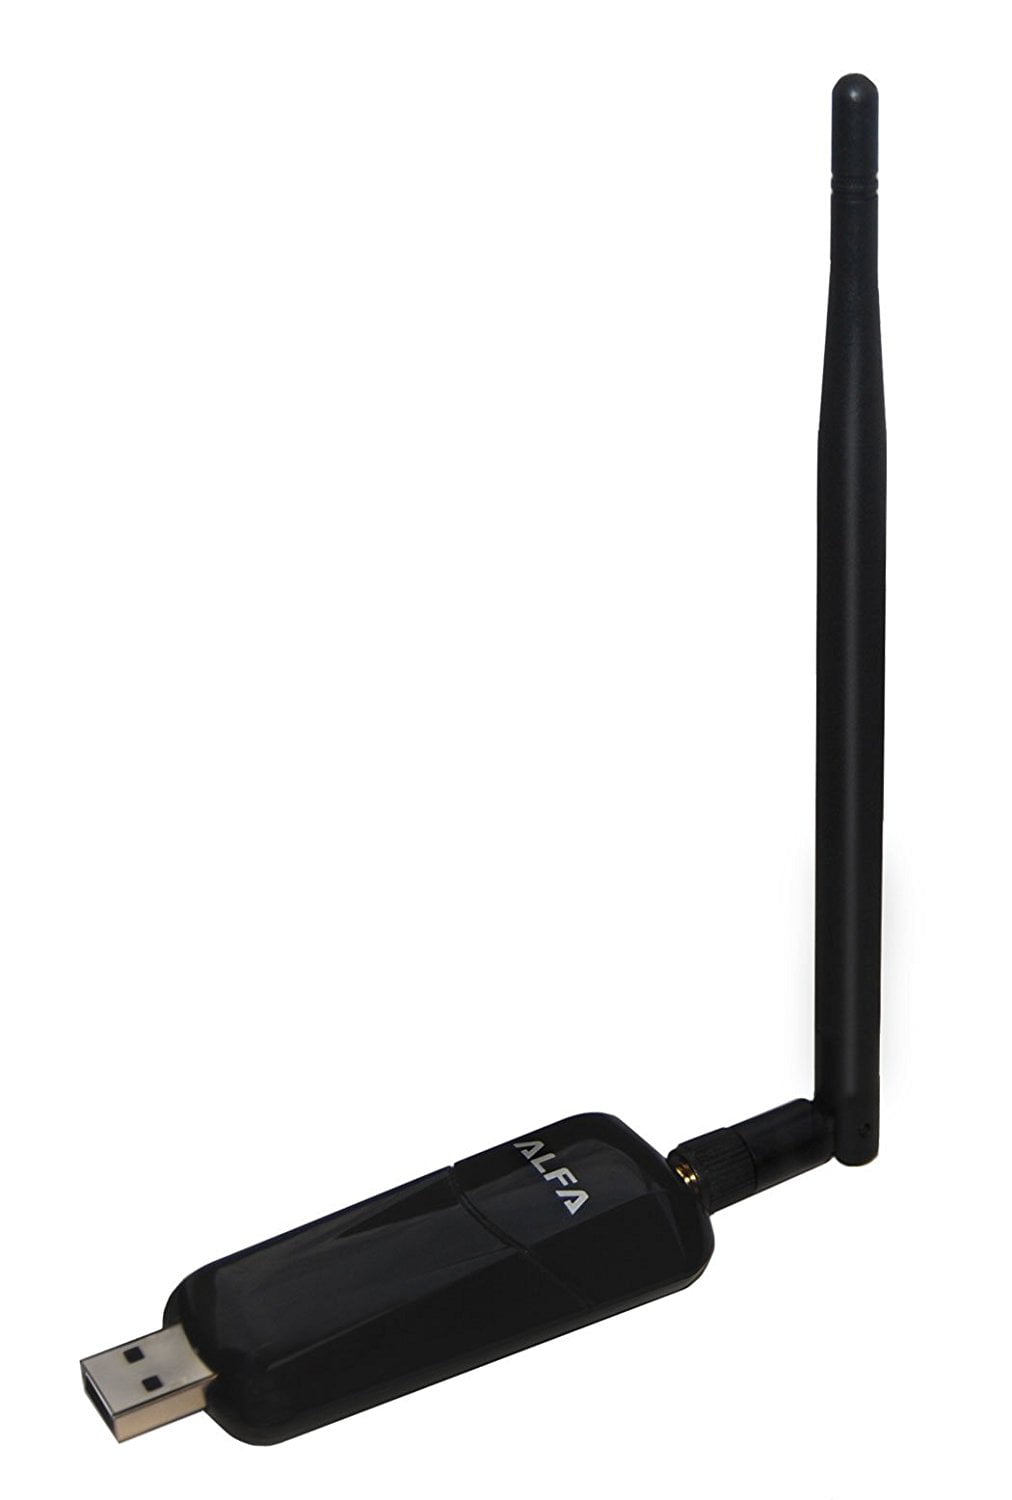 High Power Long Range B/N/G 300M USB Wireless Network Adapter 1000MW WIFI 